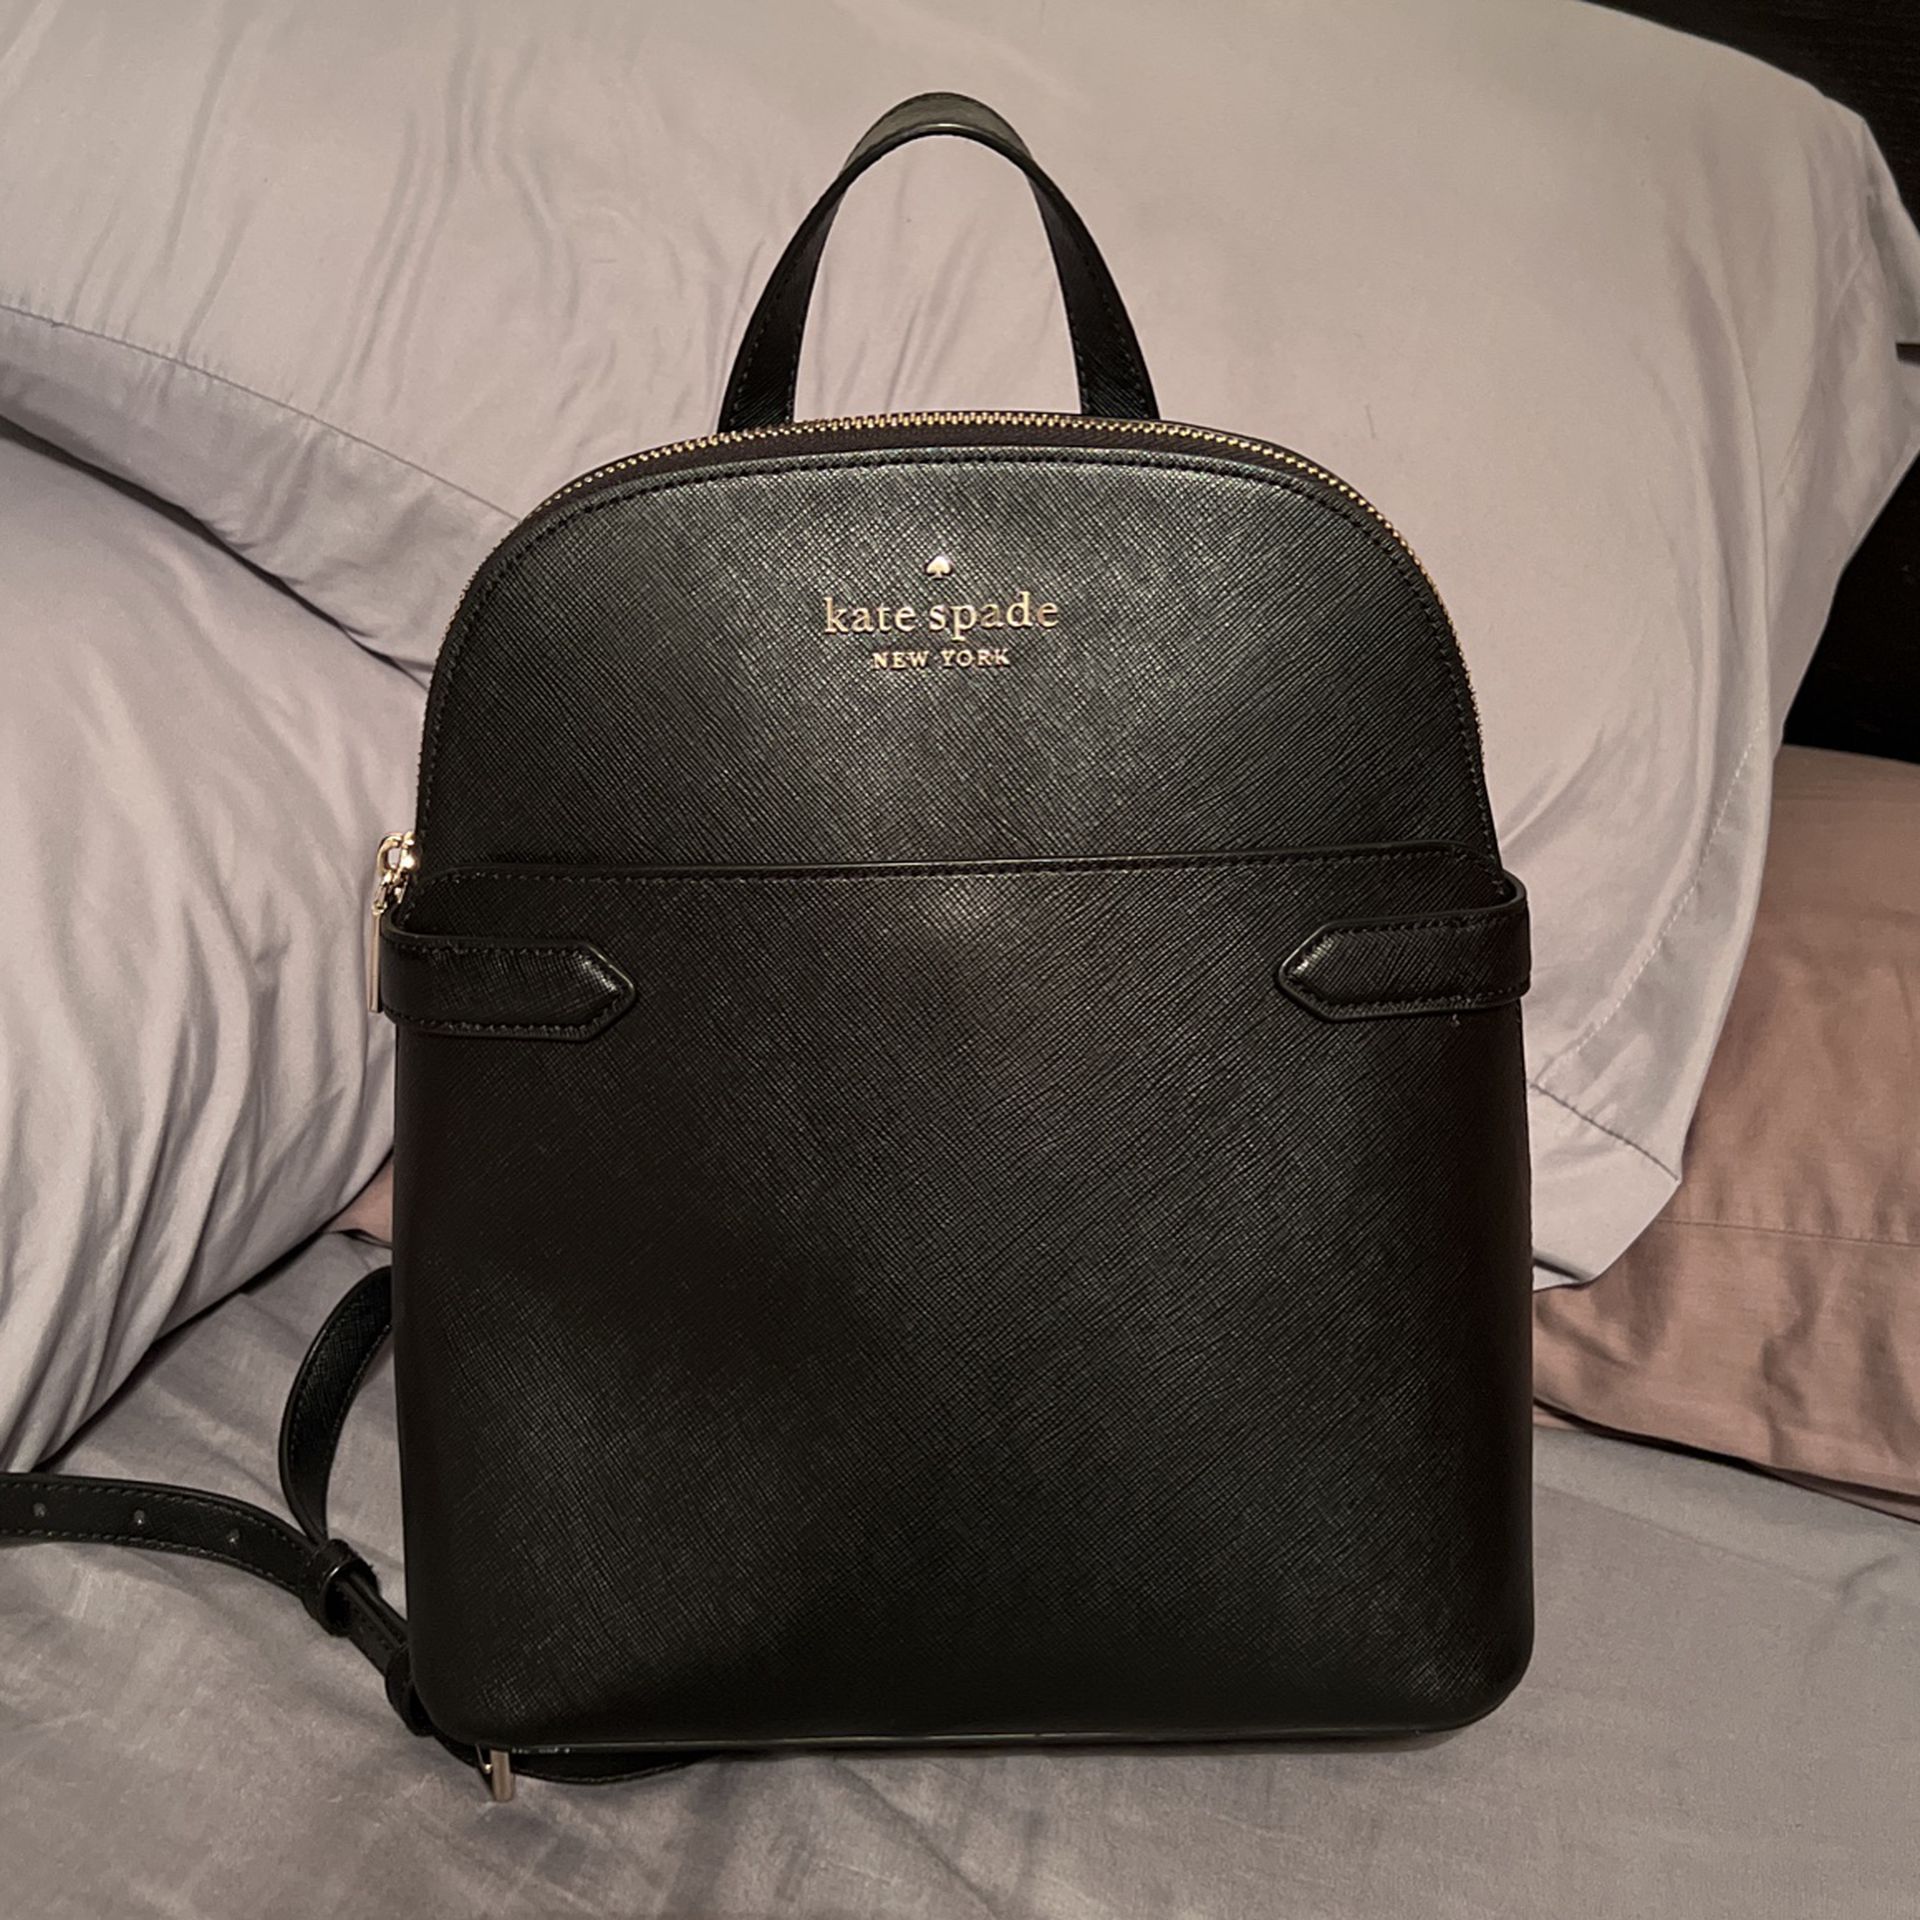 Kate Spade Backpack for Sale in Las Vegas, NV - OfferUp